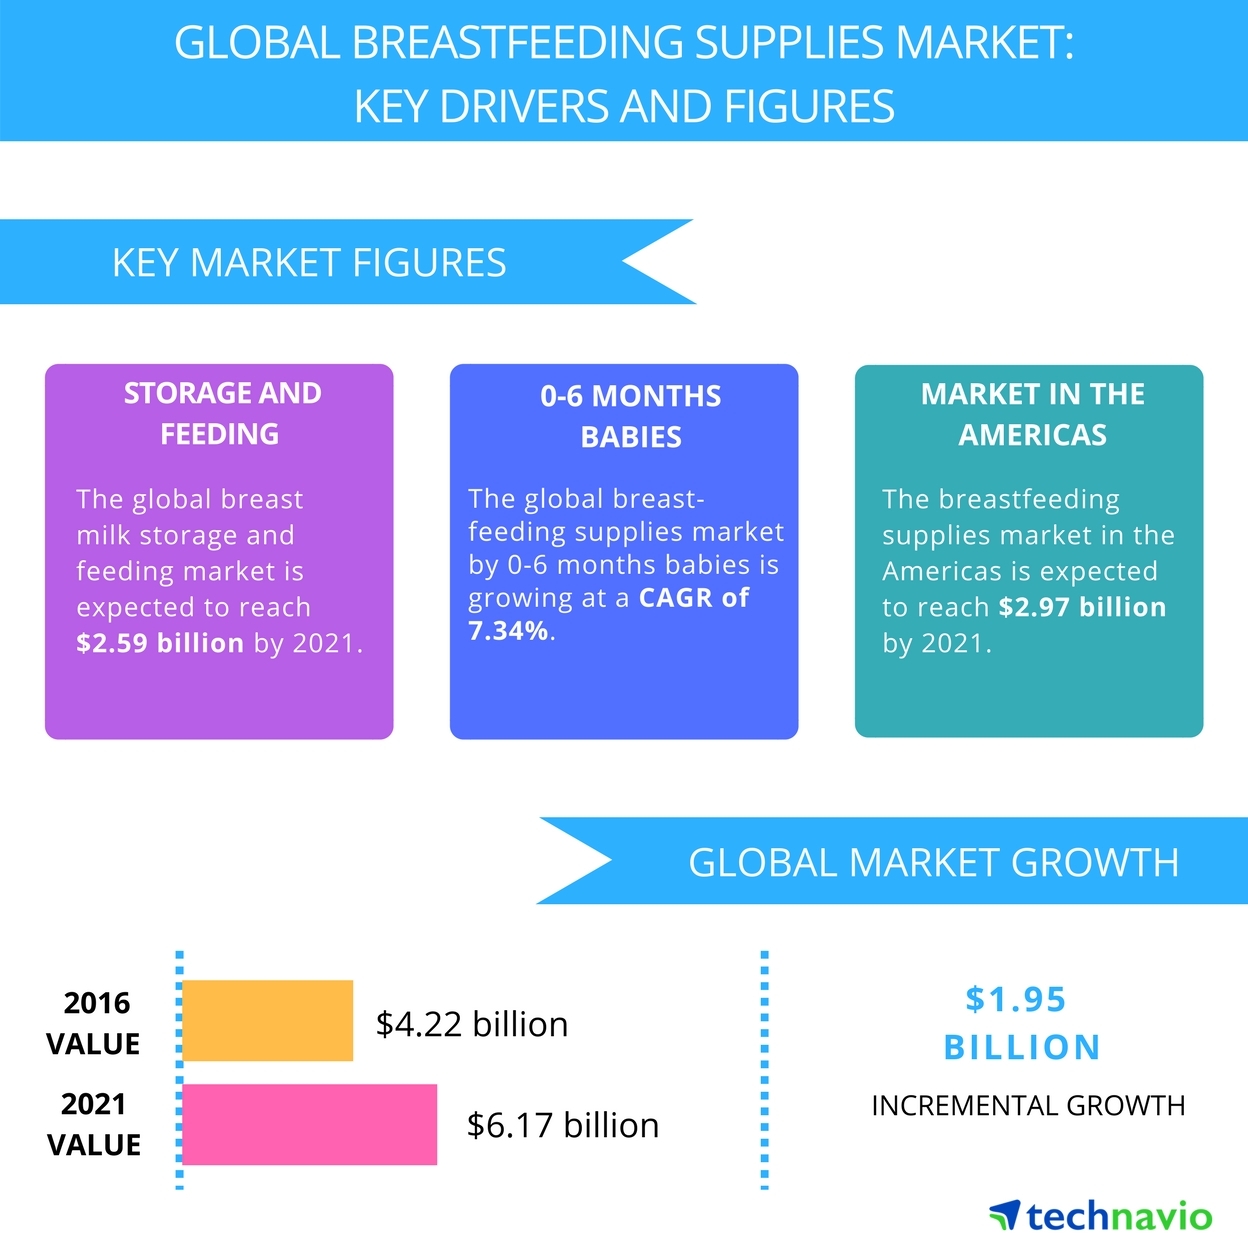 Top 3 Trends Impacting the Global Breastfeeding Supplies Market